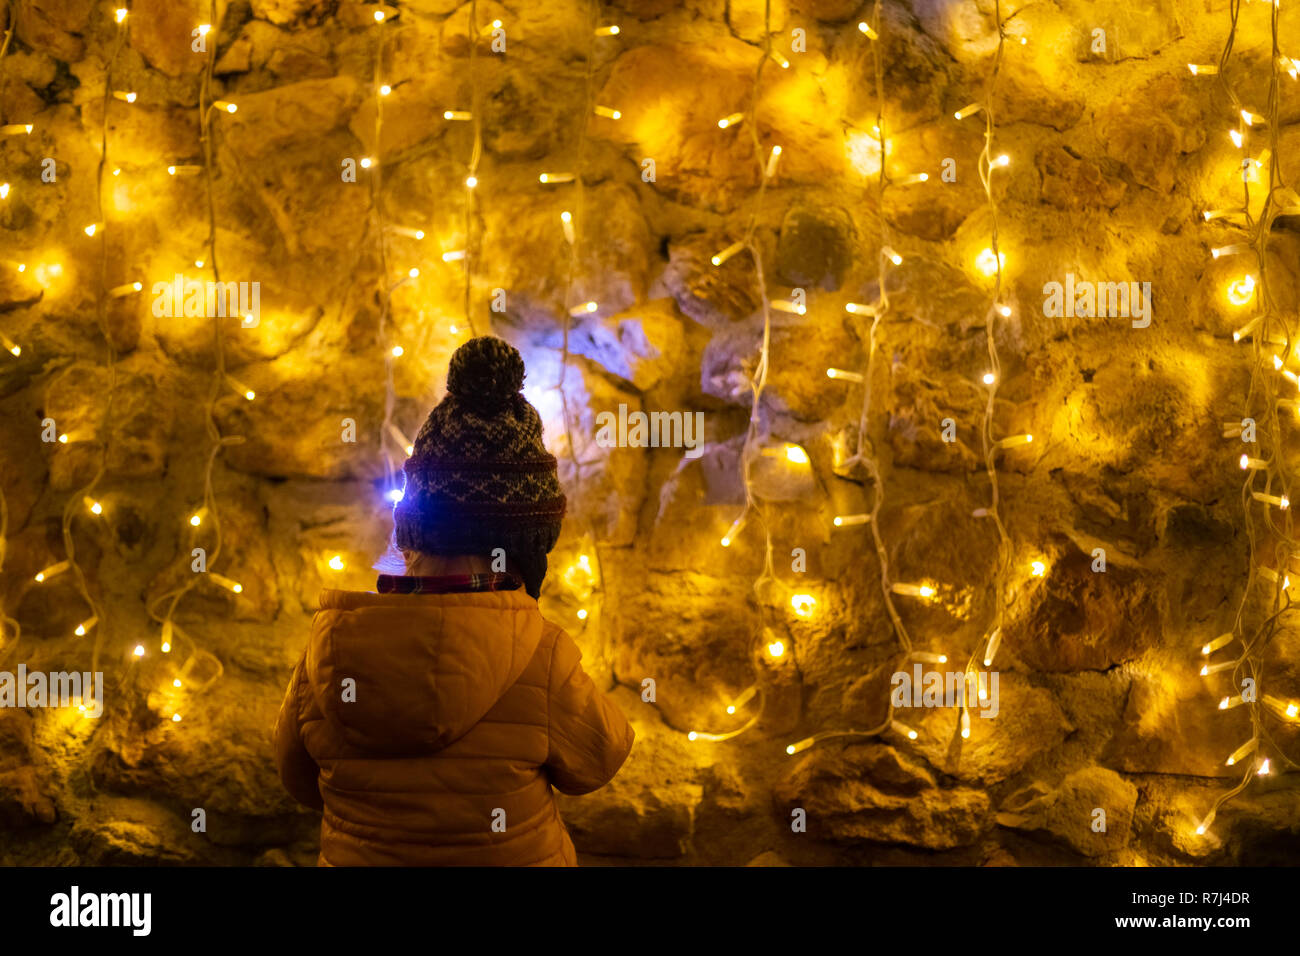 Young boy looking to Christmas lights, Zagreb, Croacia. Stock Photo